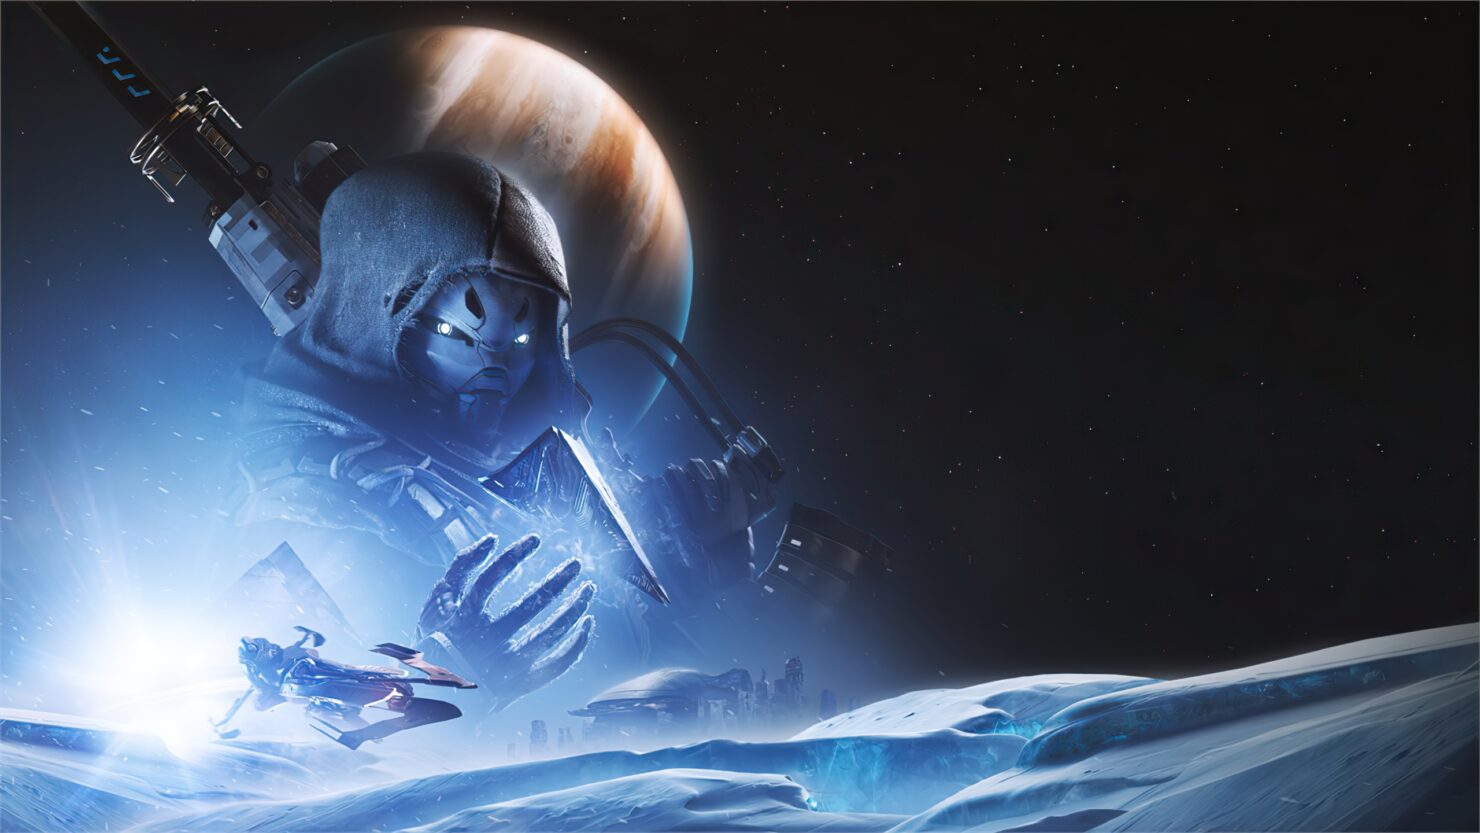 Destiny 2 Beyond Light Trailer Gives Guardians a Glimpse